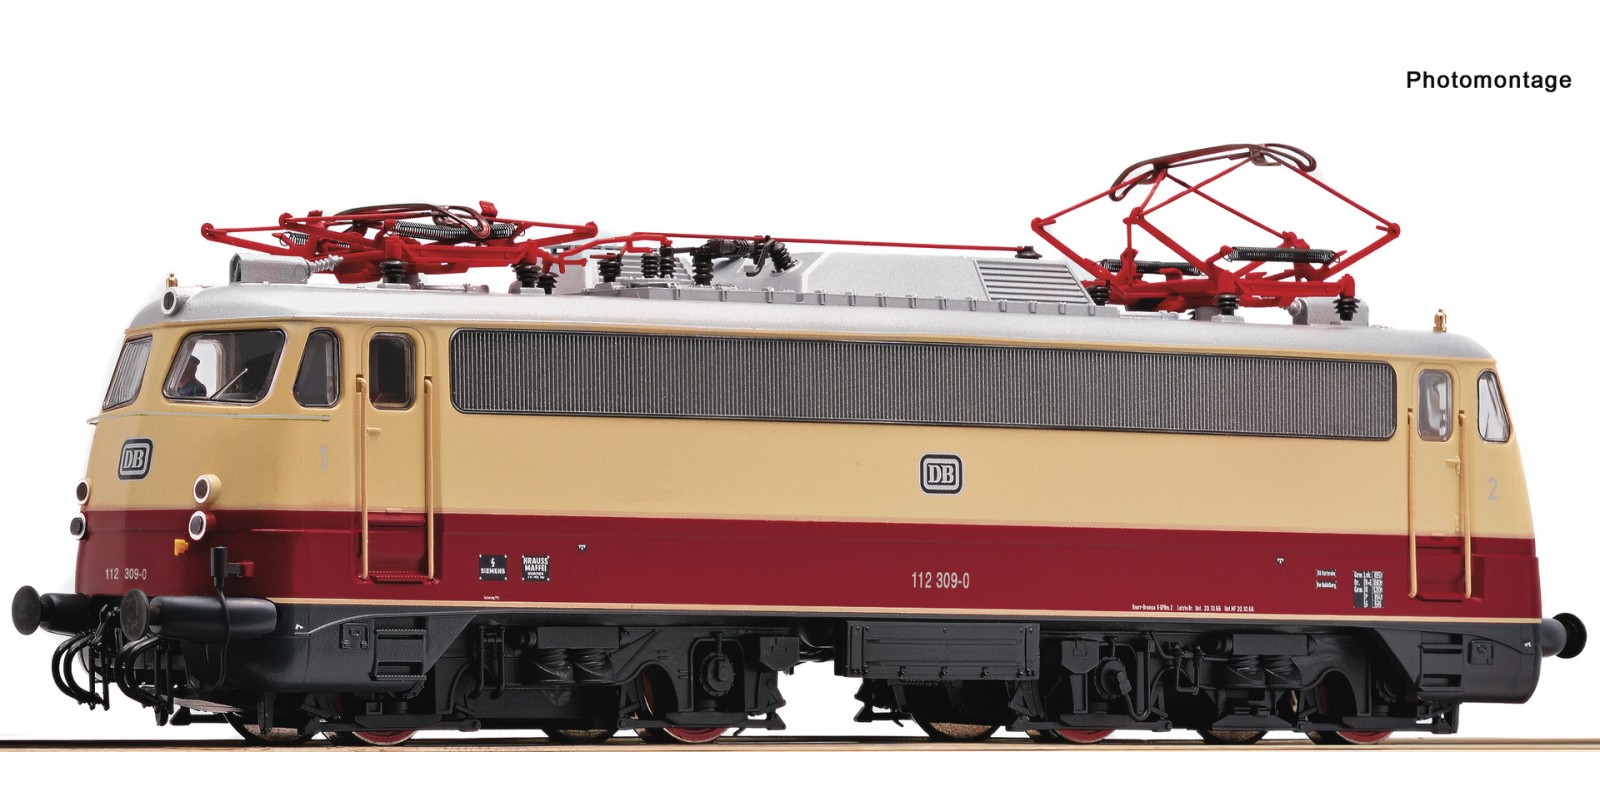 RO73076 - Electric locomotive 112 309-0, DB